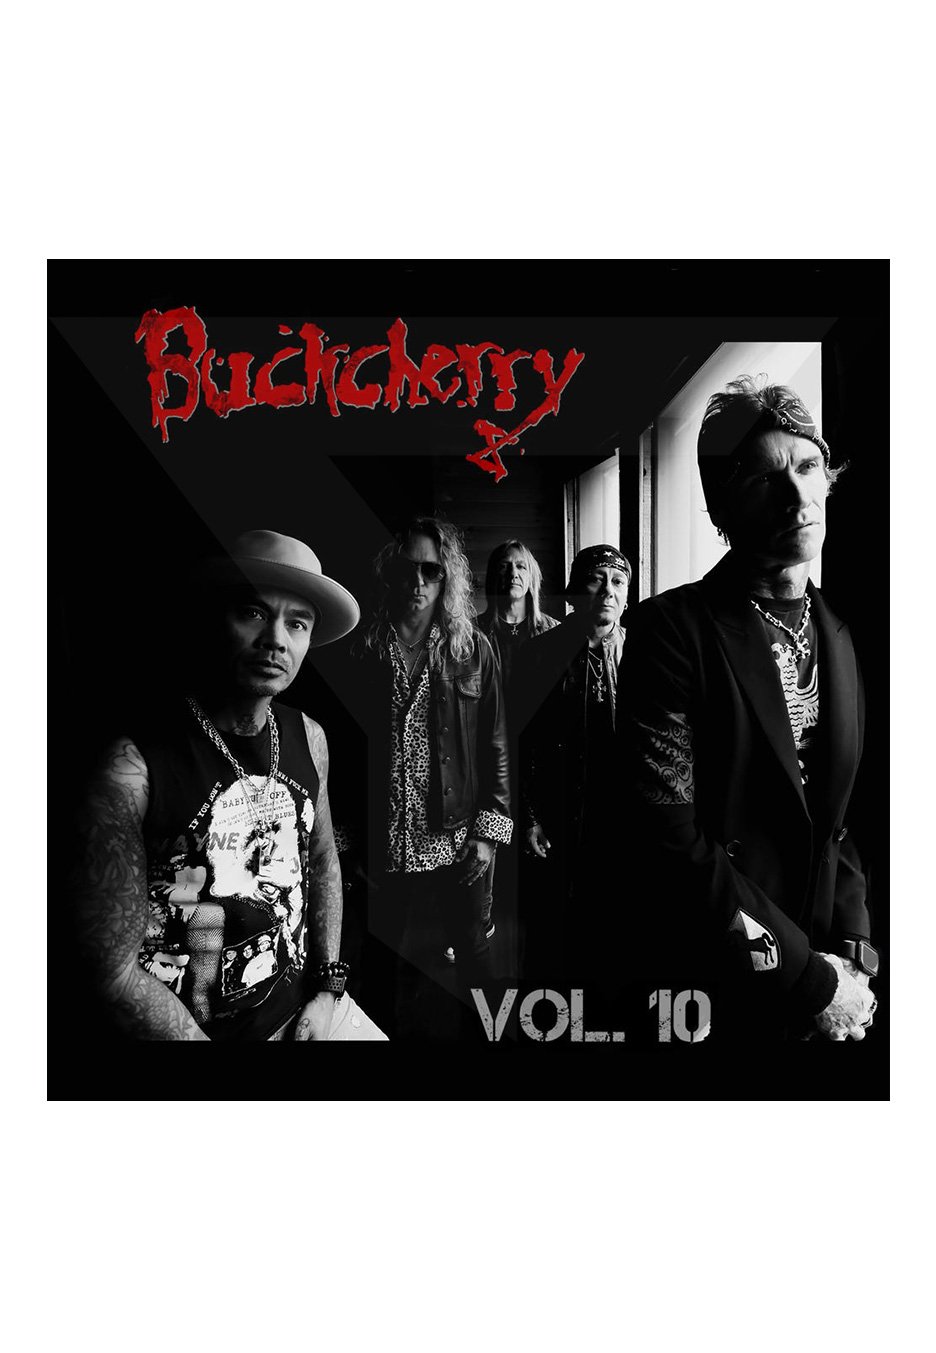 Buckcherry - Vol. 10 - Digipak CD